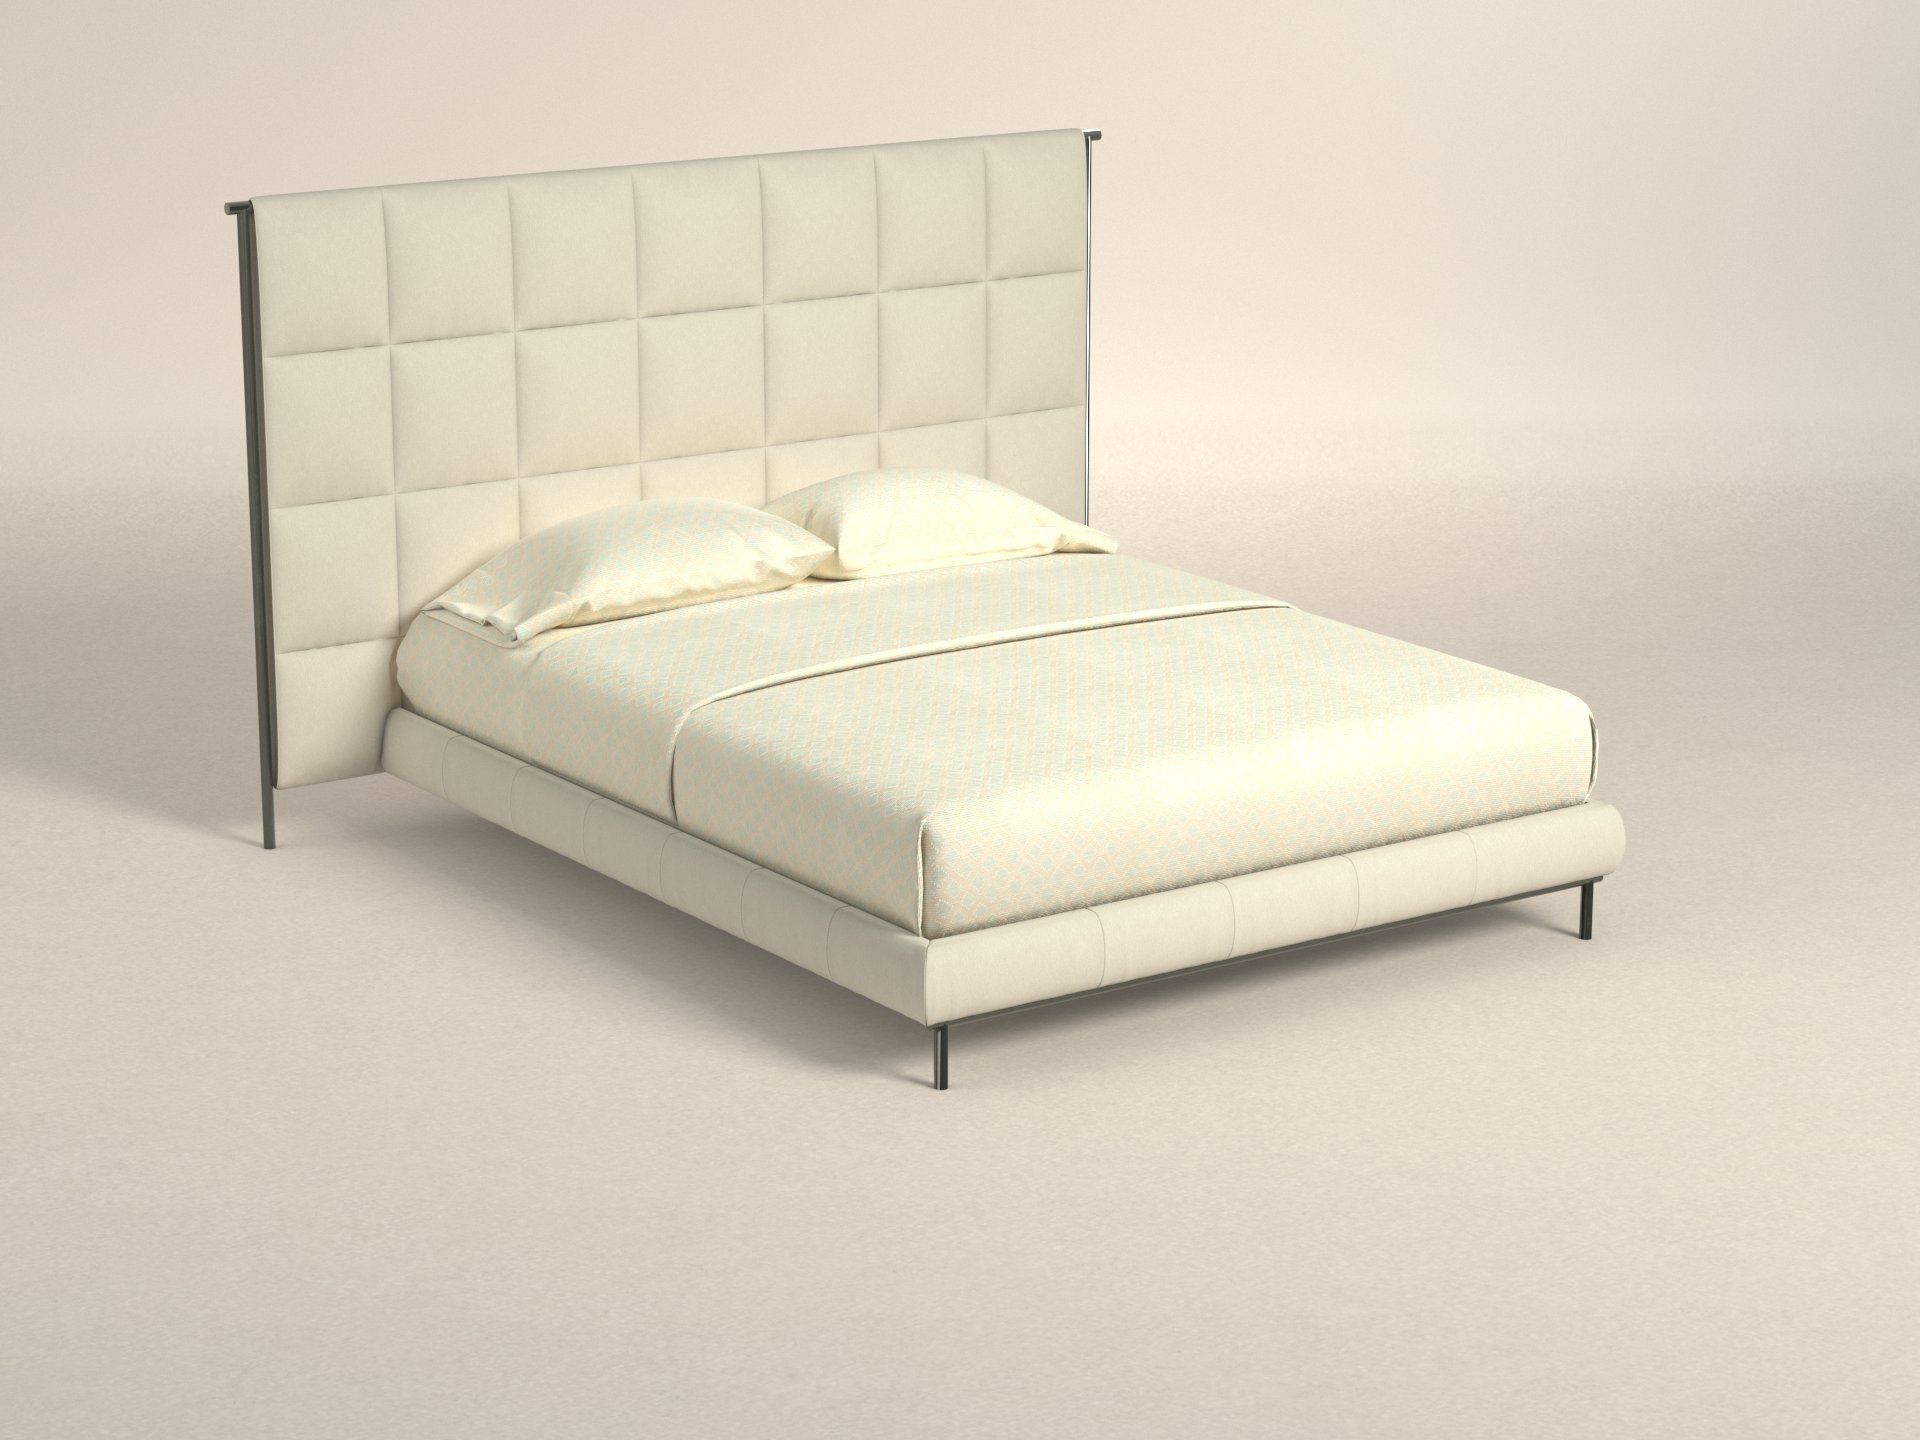 double bed mattress price in ksa